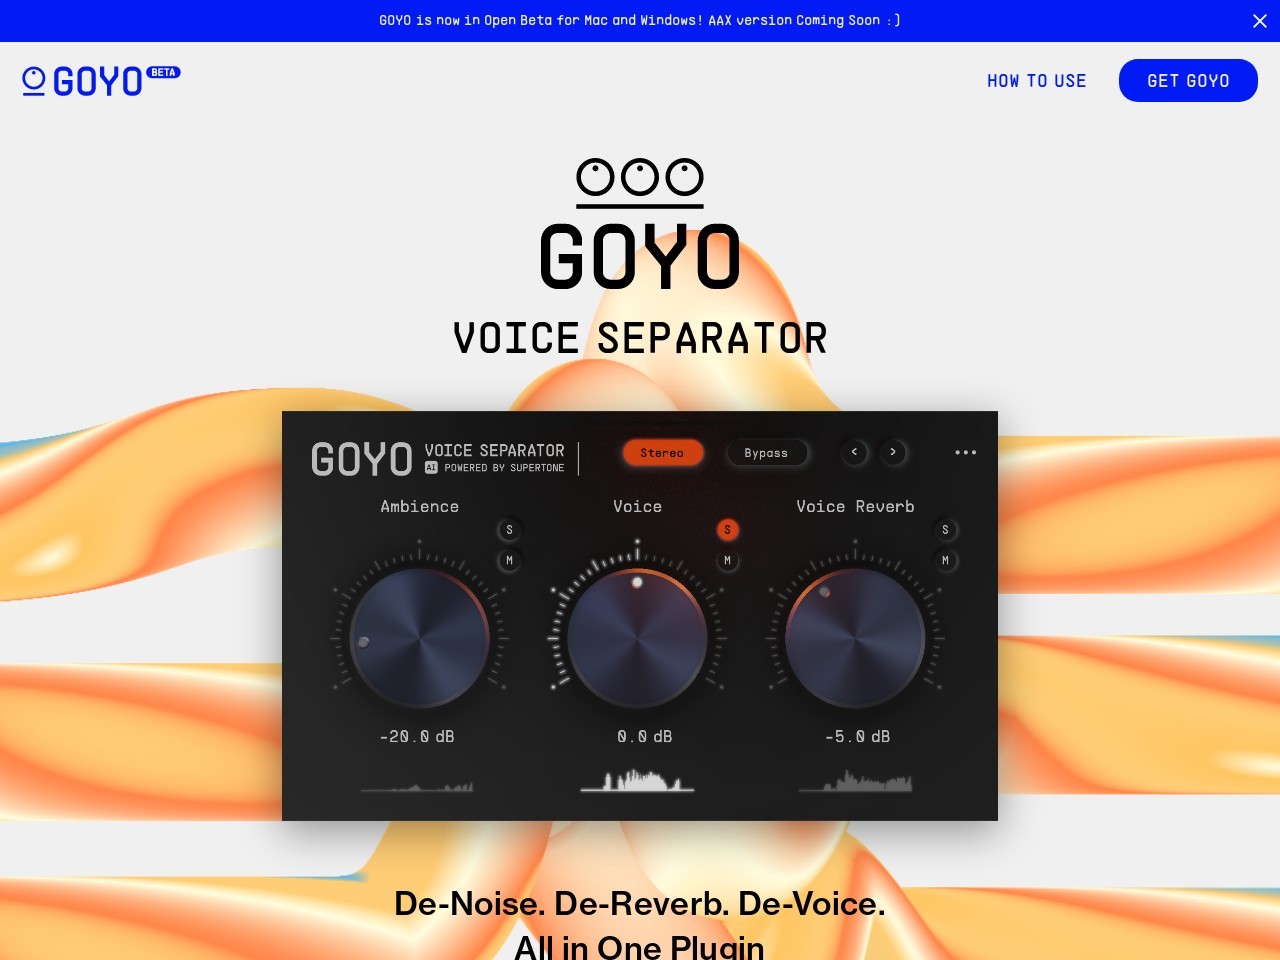 GOYO Voice Separator | De-noise, De-Reverb, De-Voice - All in One Plugin